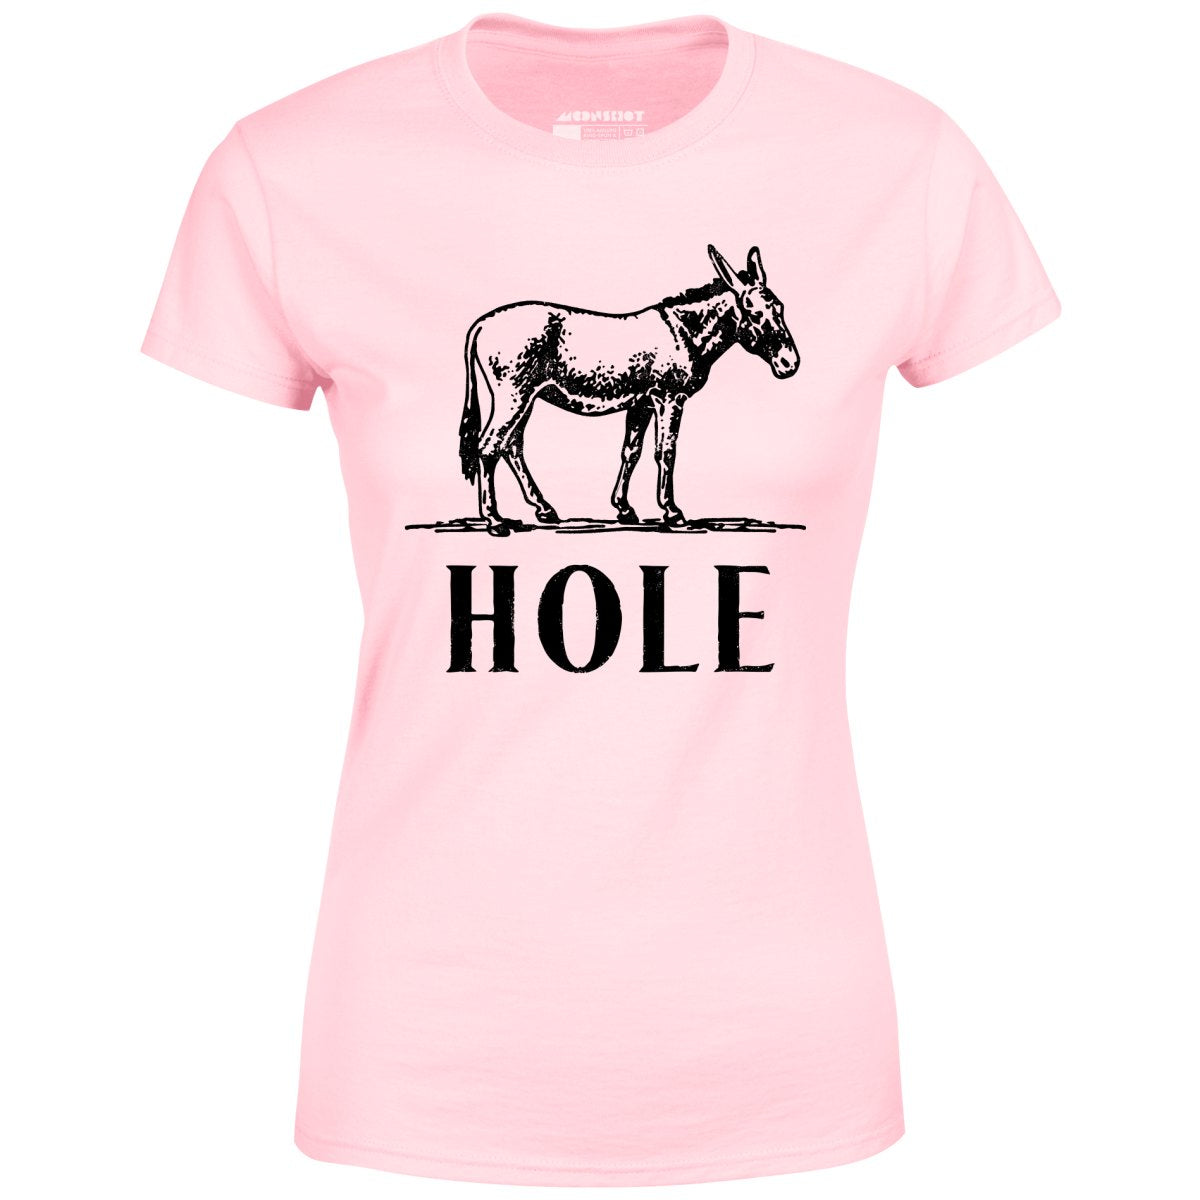 Asshole - Women's T-Shirt